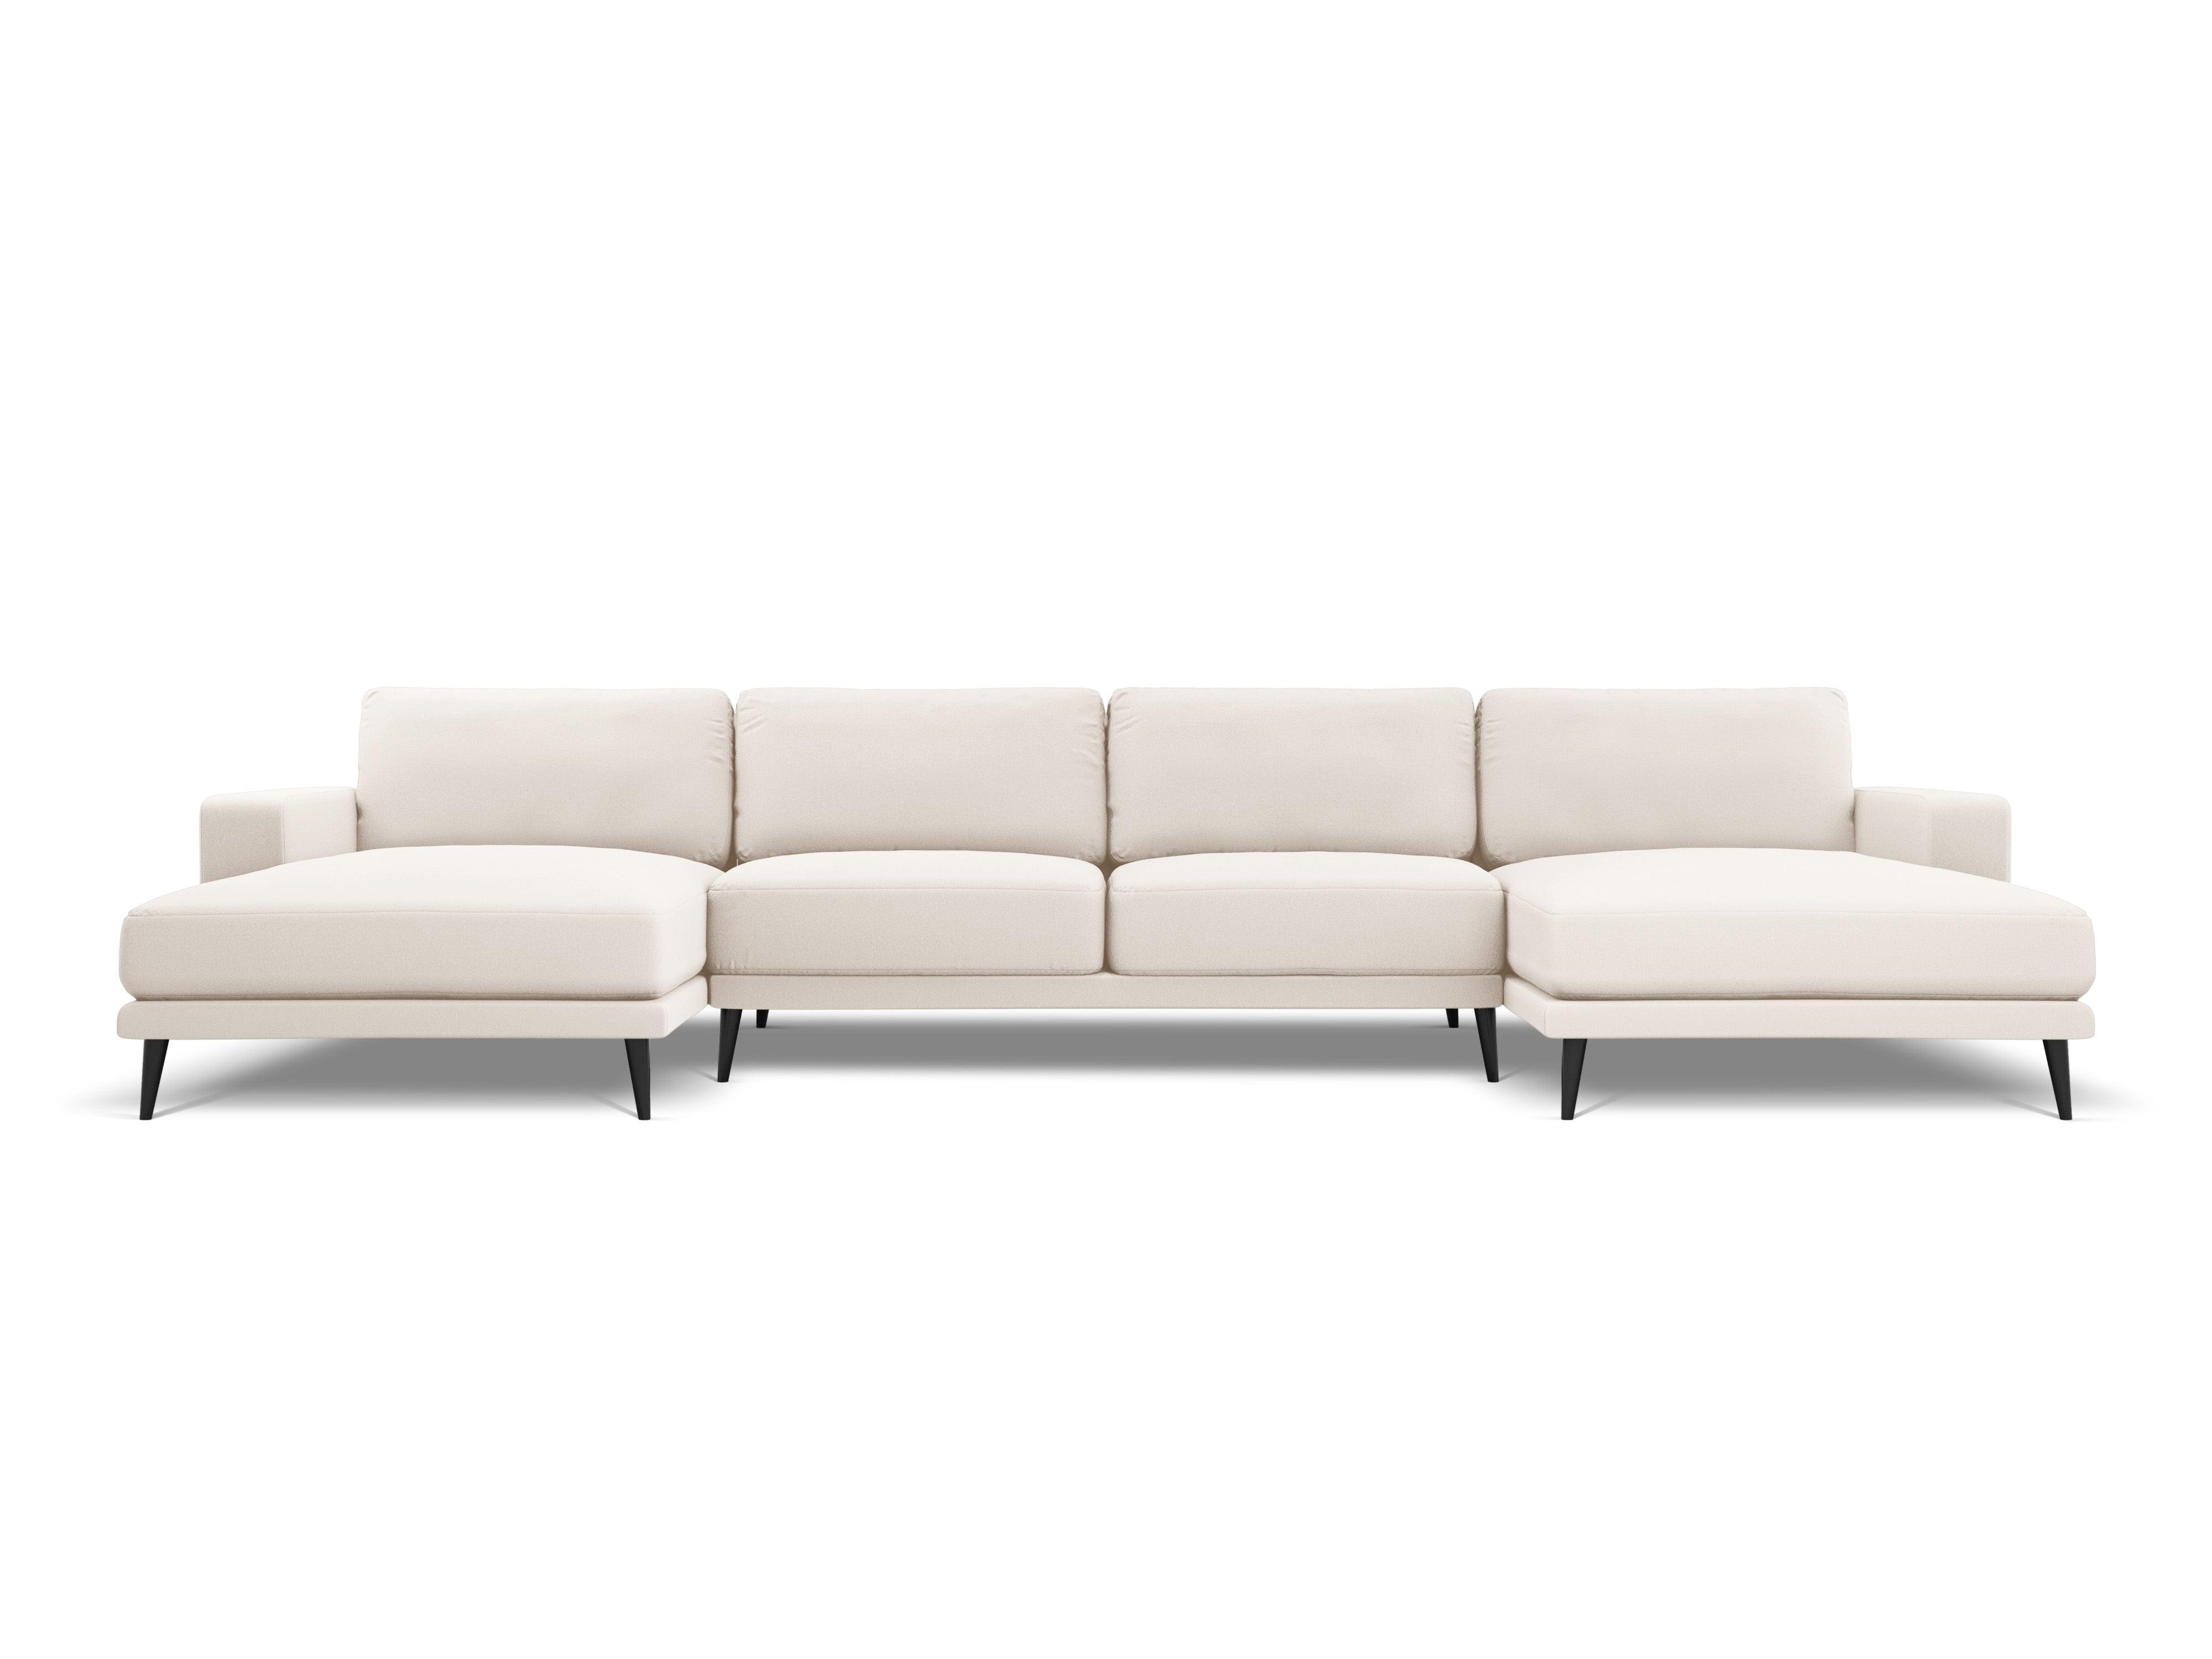 Panoramic Sofa, "Kylie", 6 Seats, 302x160x80
Made in Europe, Micadoni, Eye on Design